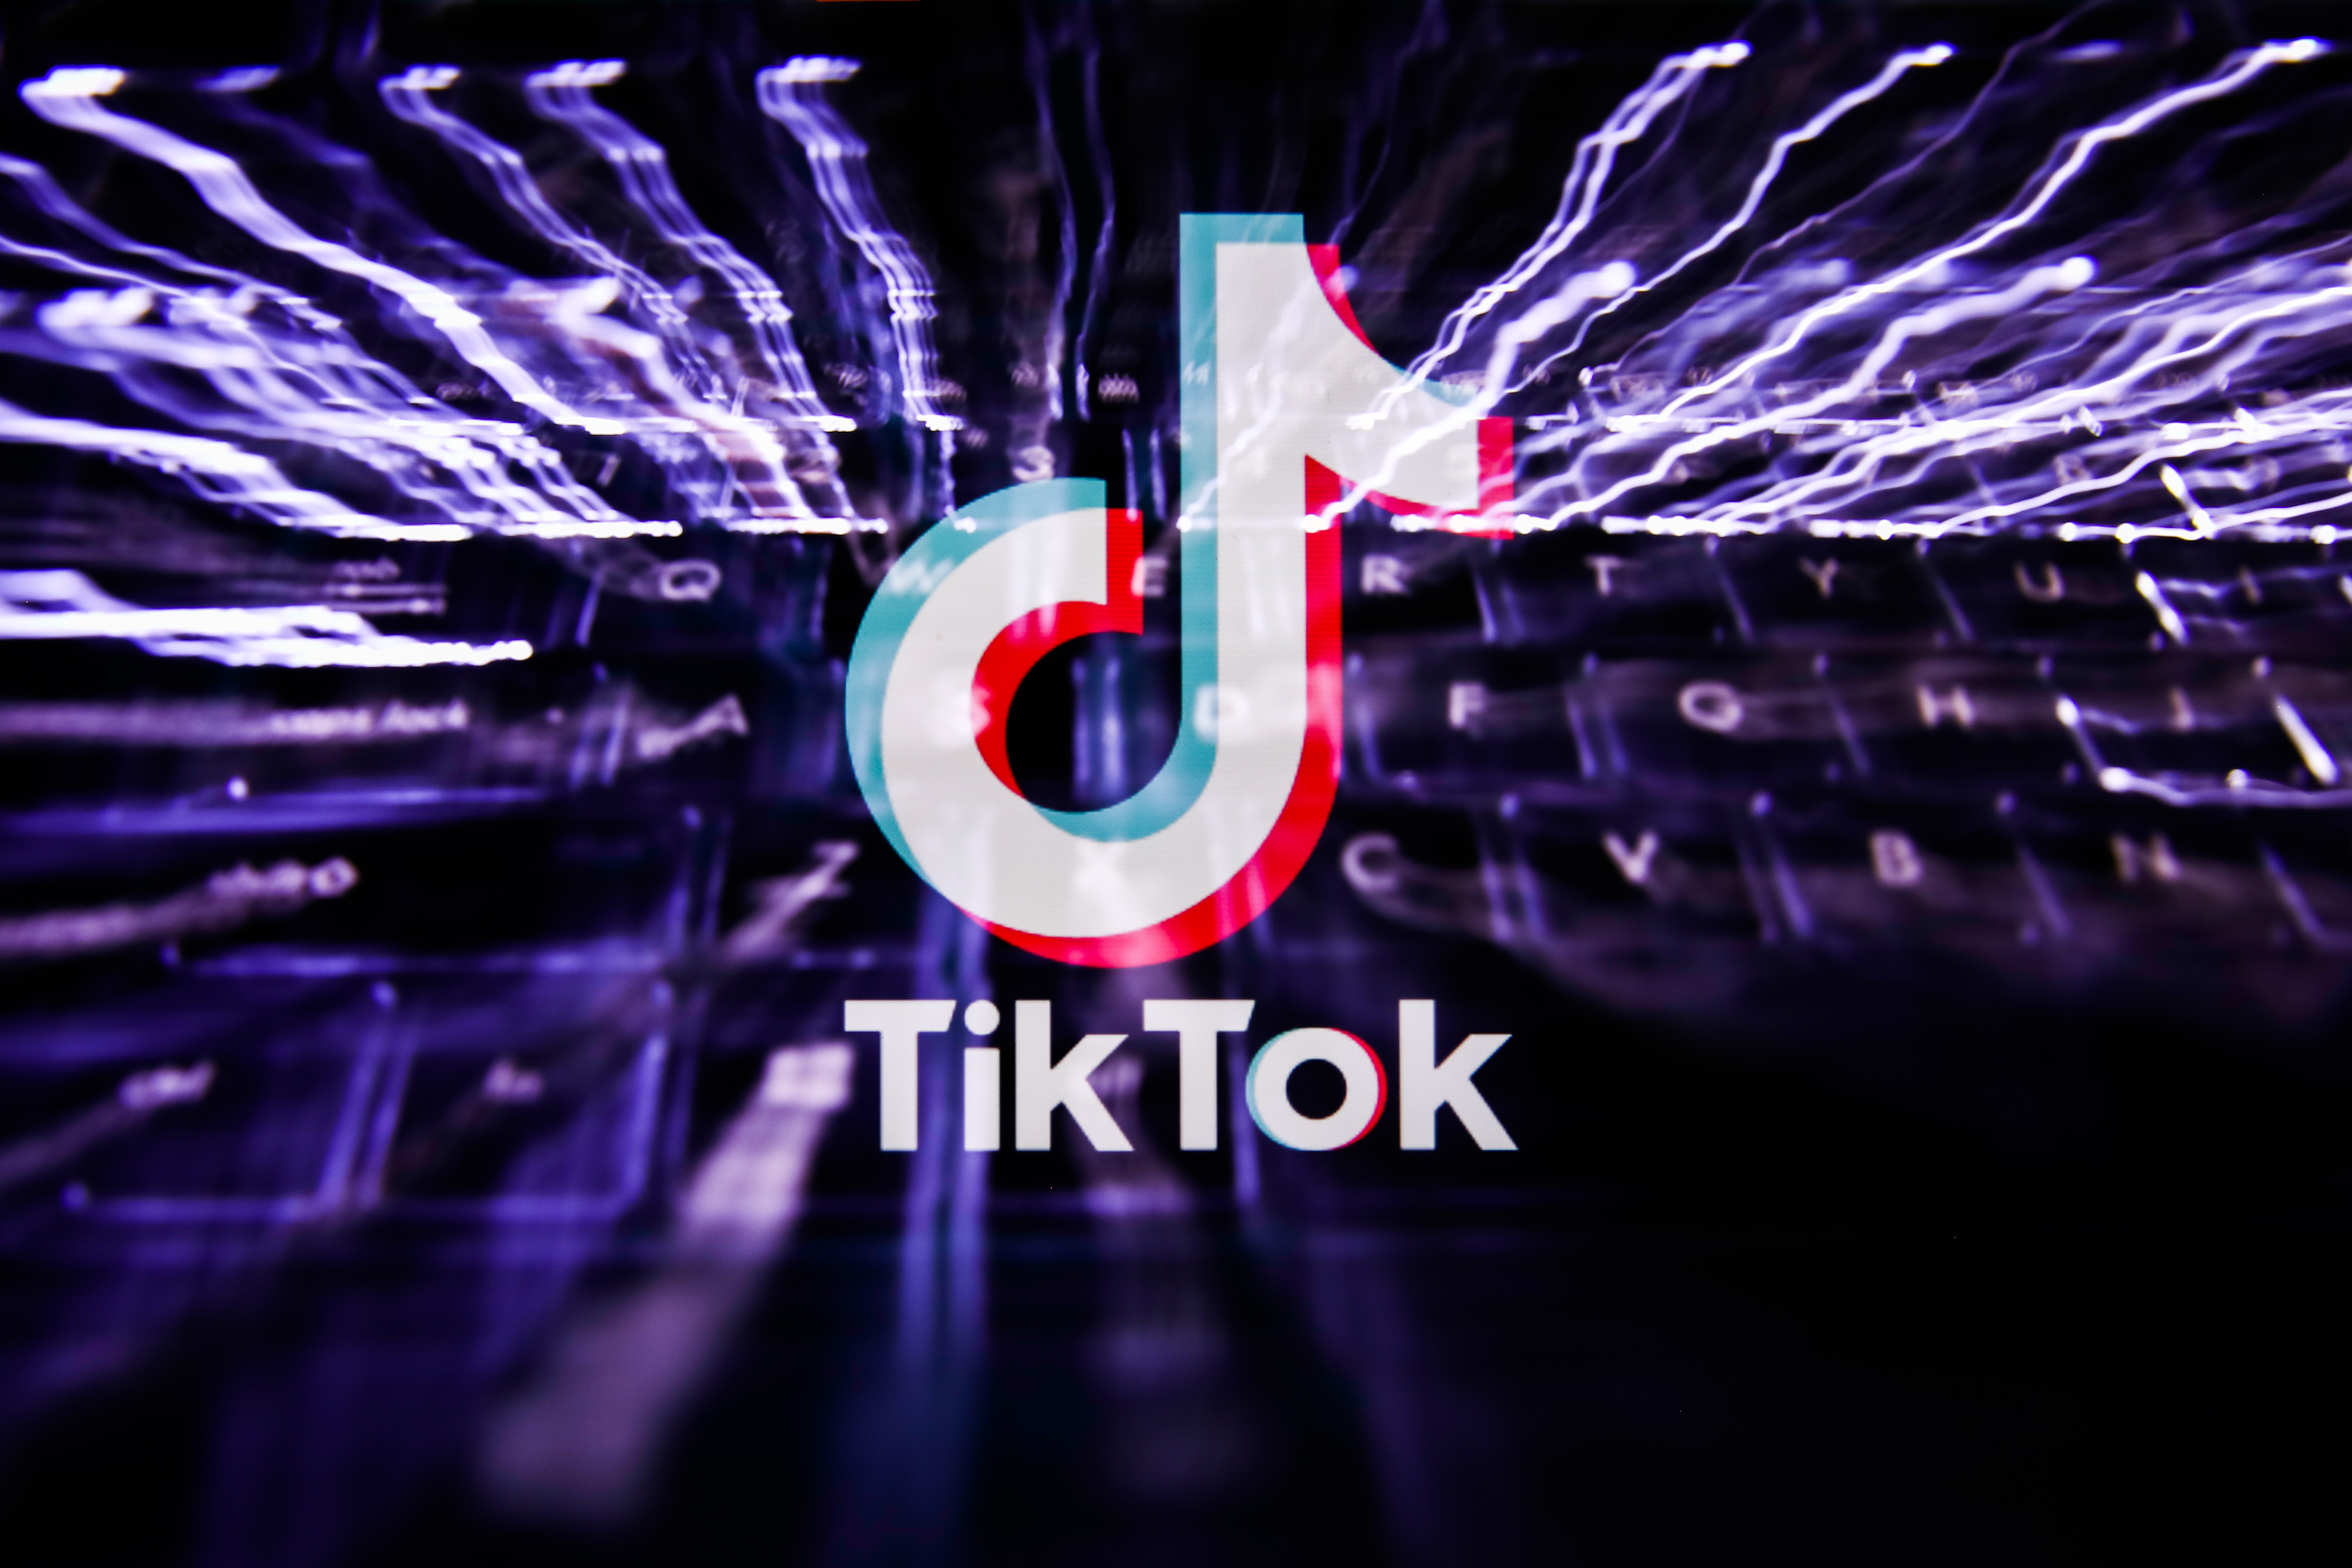 TikTok Live Wallpaper APK (Android App) - Free Download